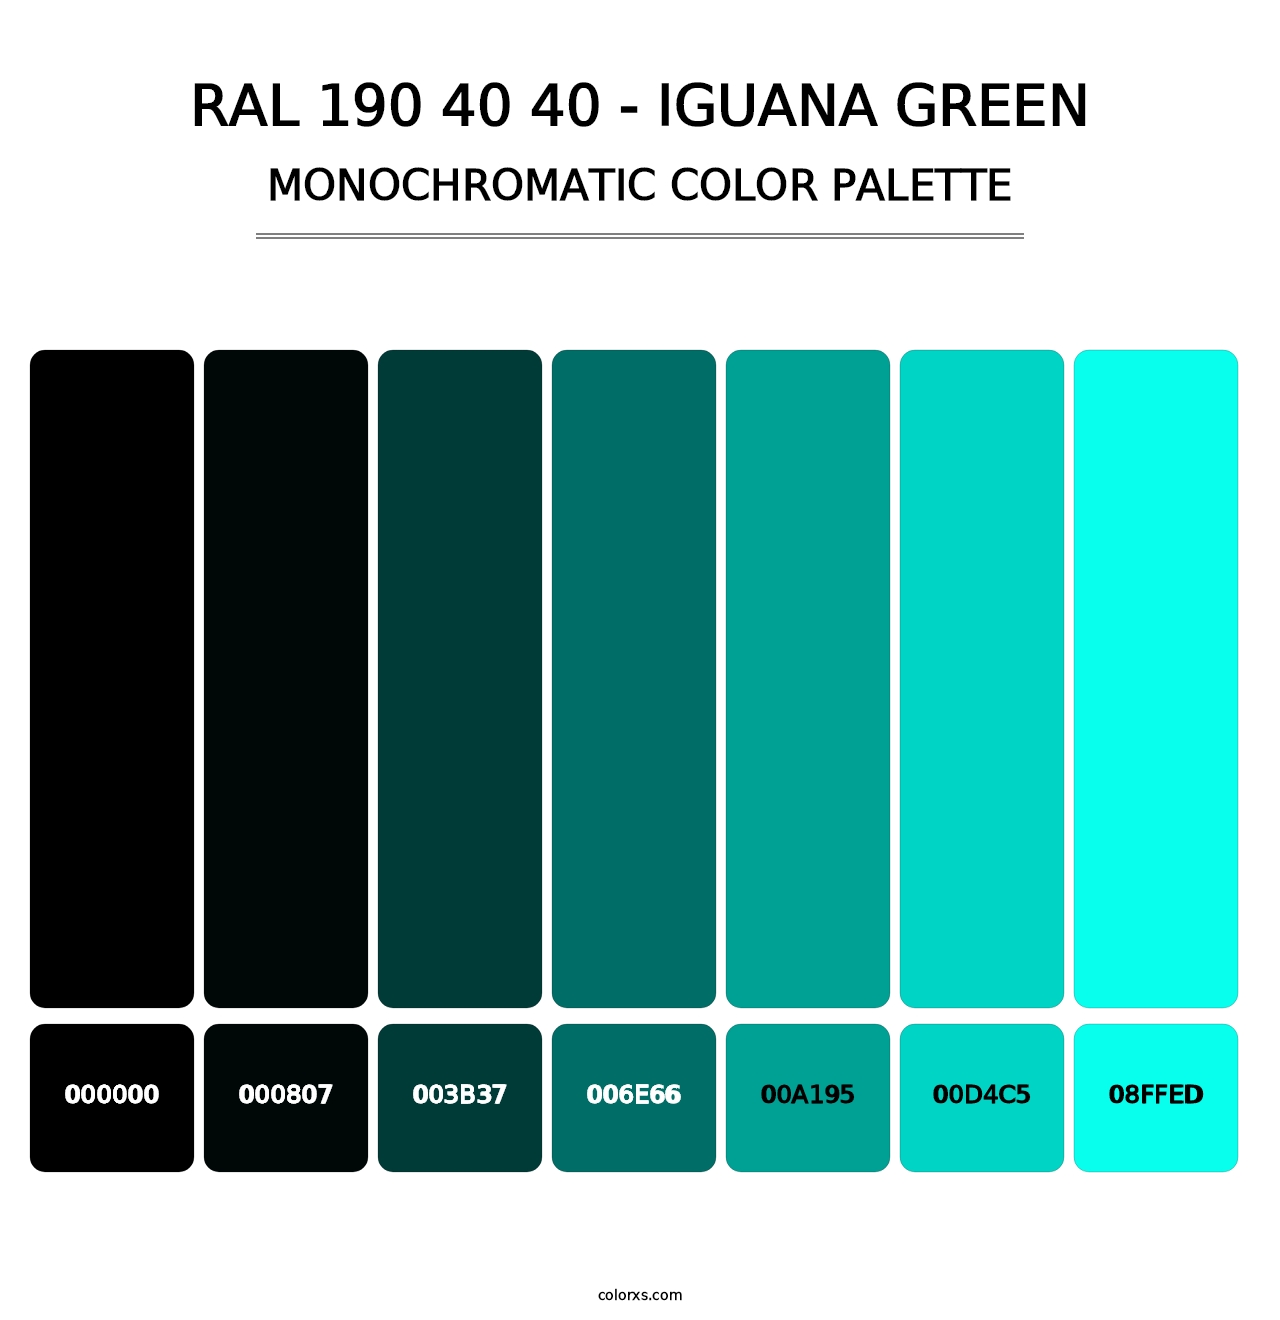 RAL 190 40 40 - Iguana Green - Monochromatic Color Palette